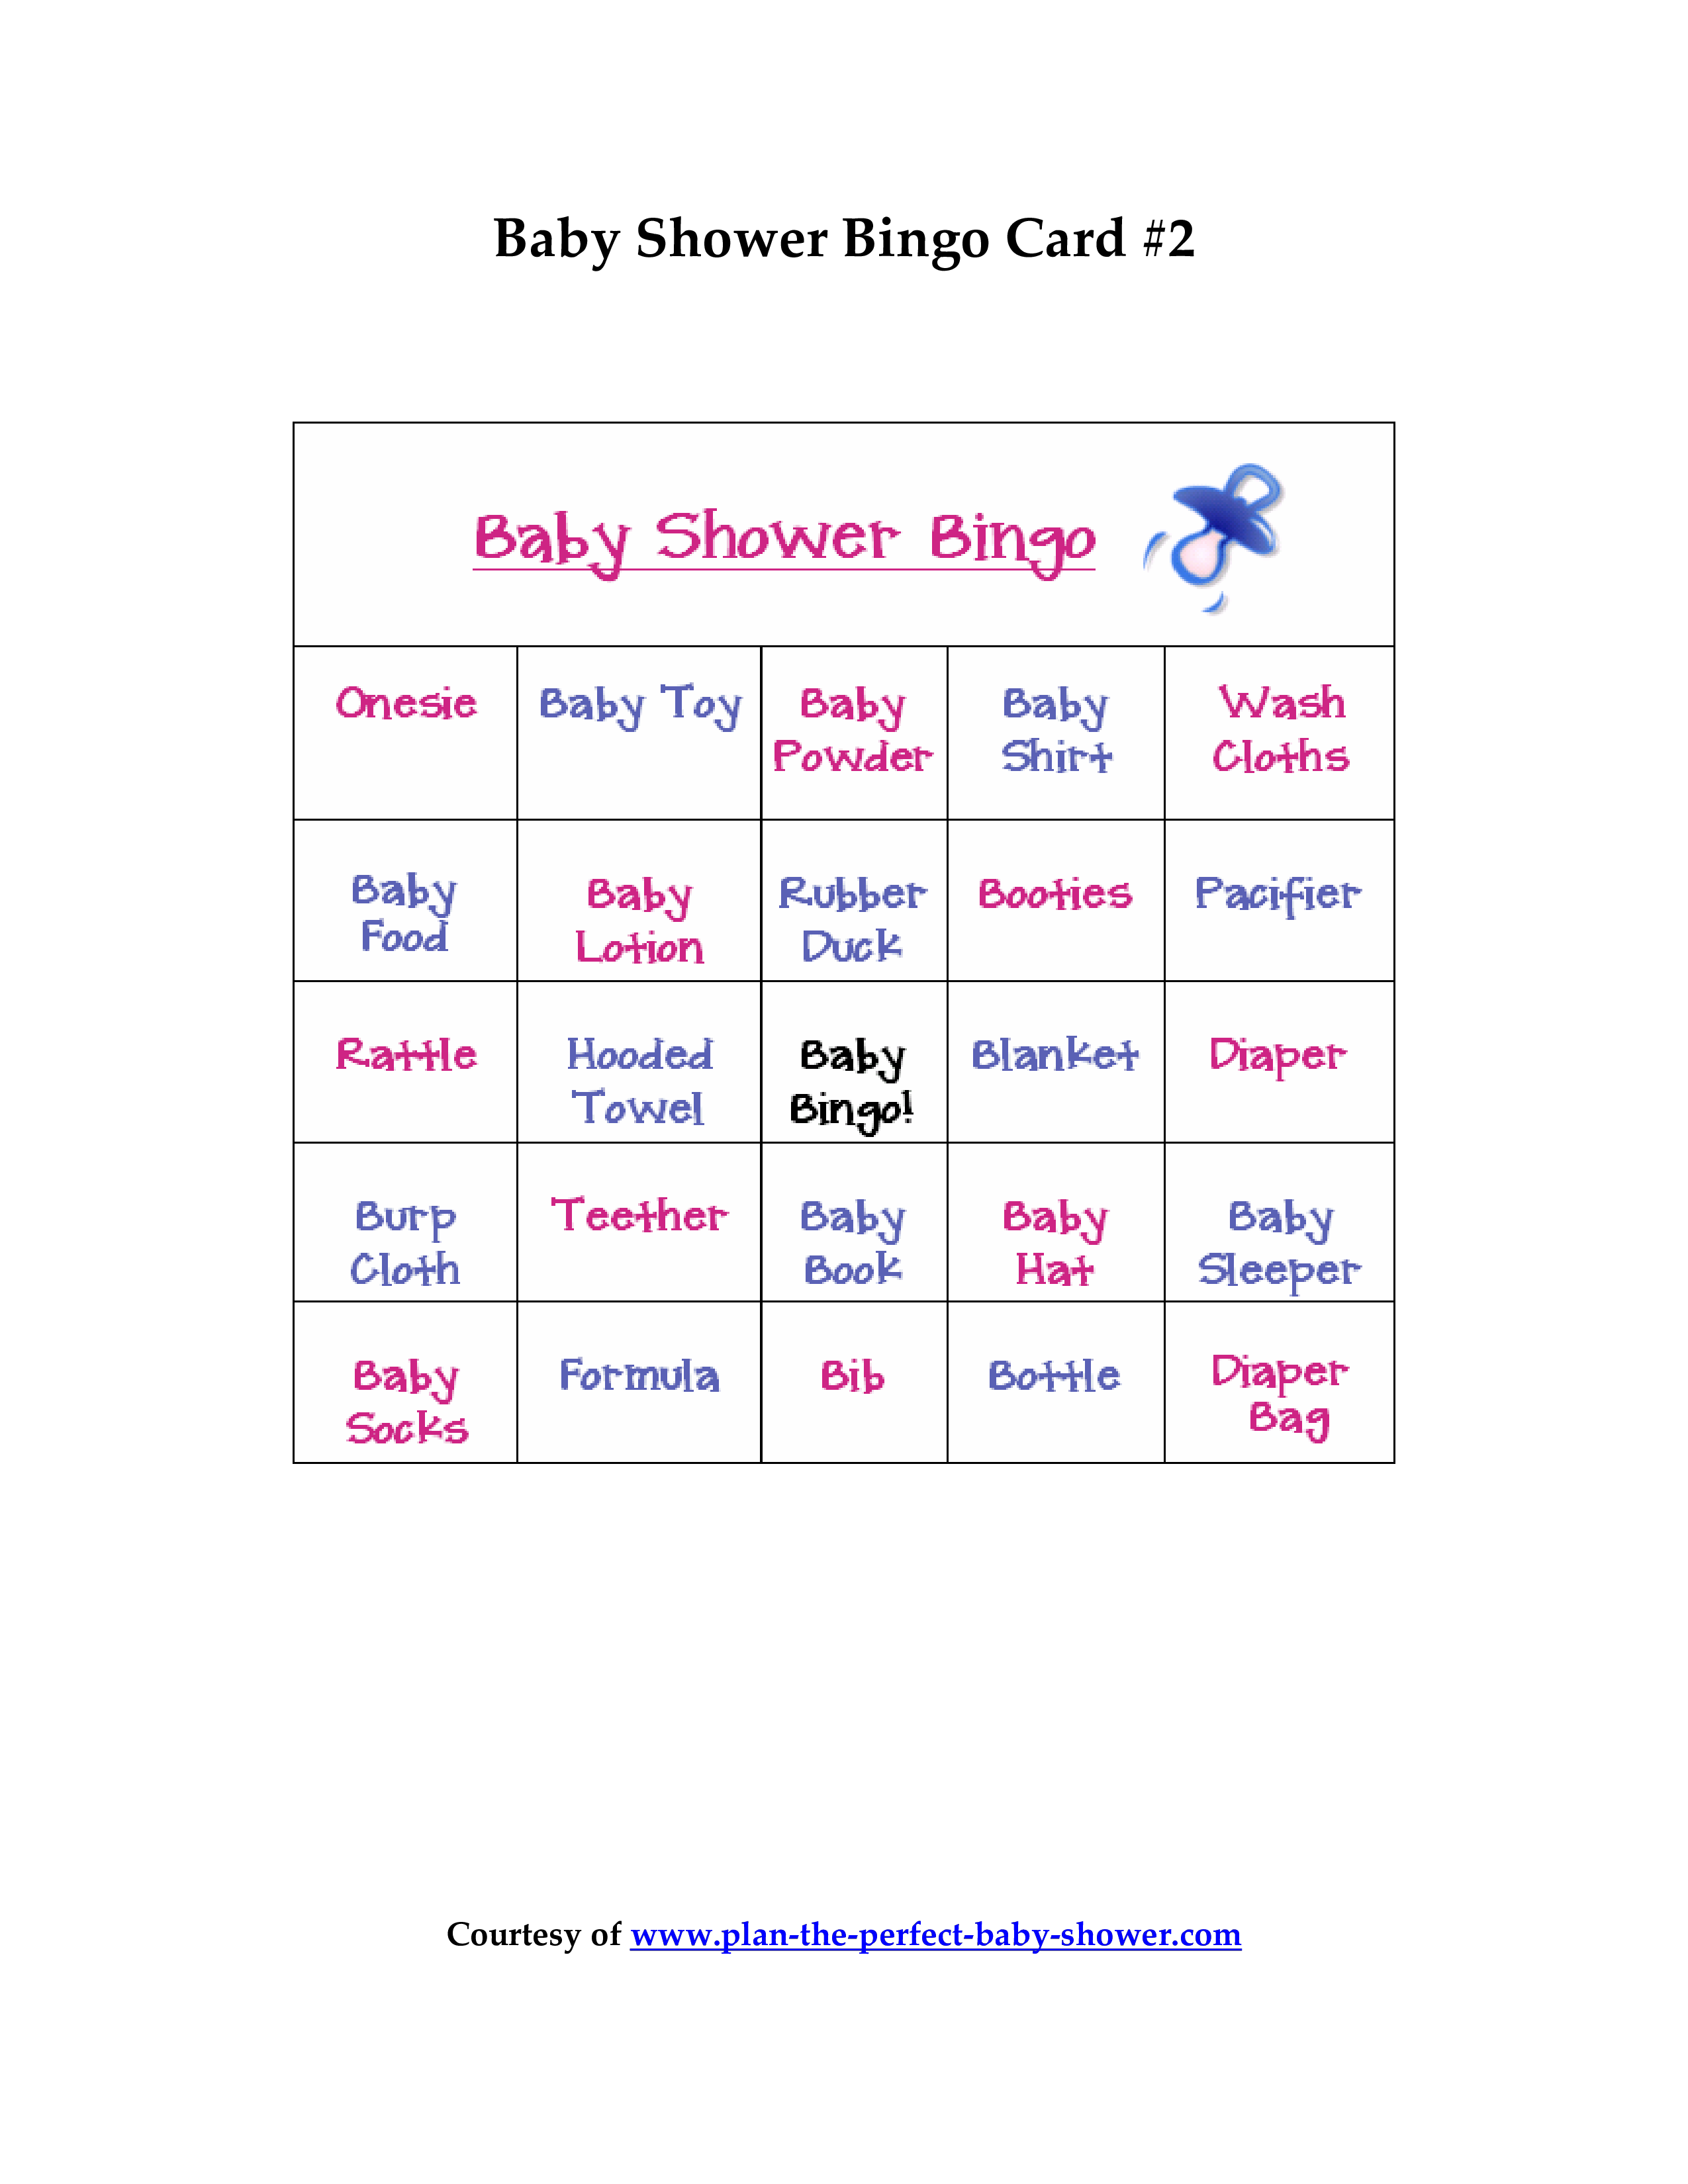 printable-baby-shower-bingo-card-templates-at-allbusinesstemplates